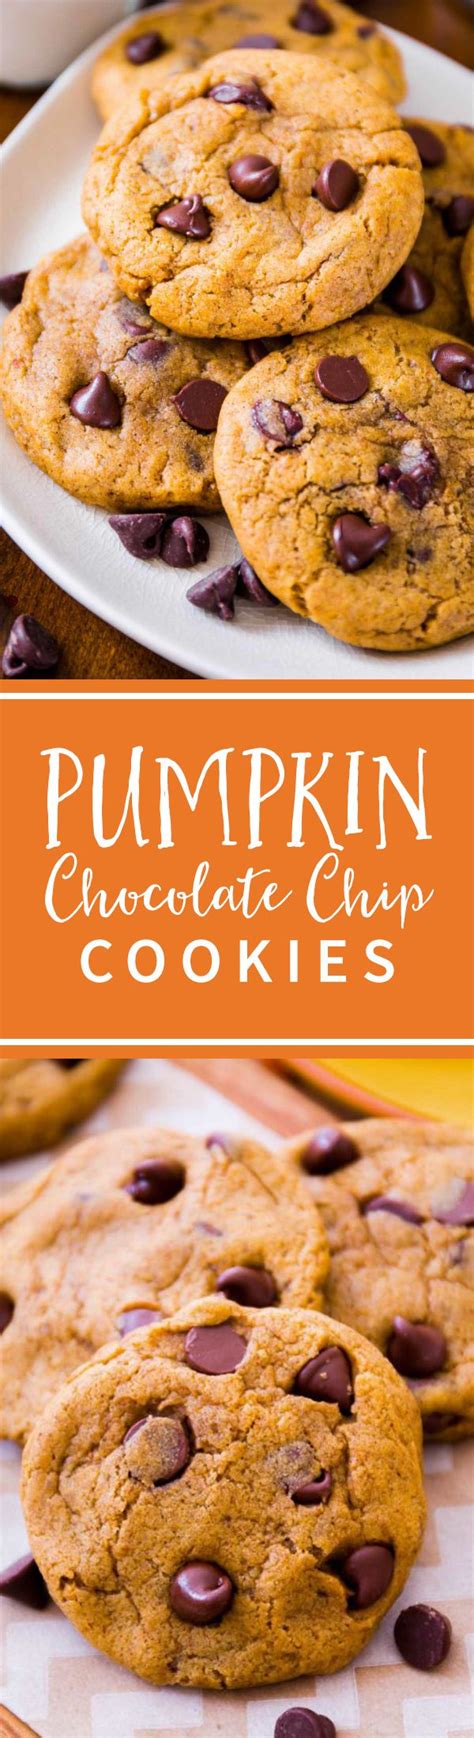 Best Pumpkin Chocolate Chip Cookies Sallys Baking Addiction Yummy